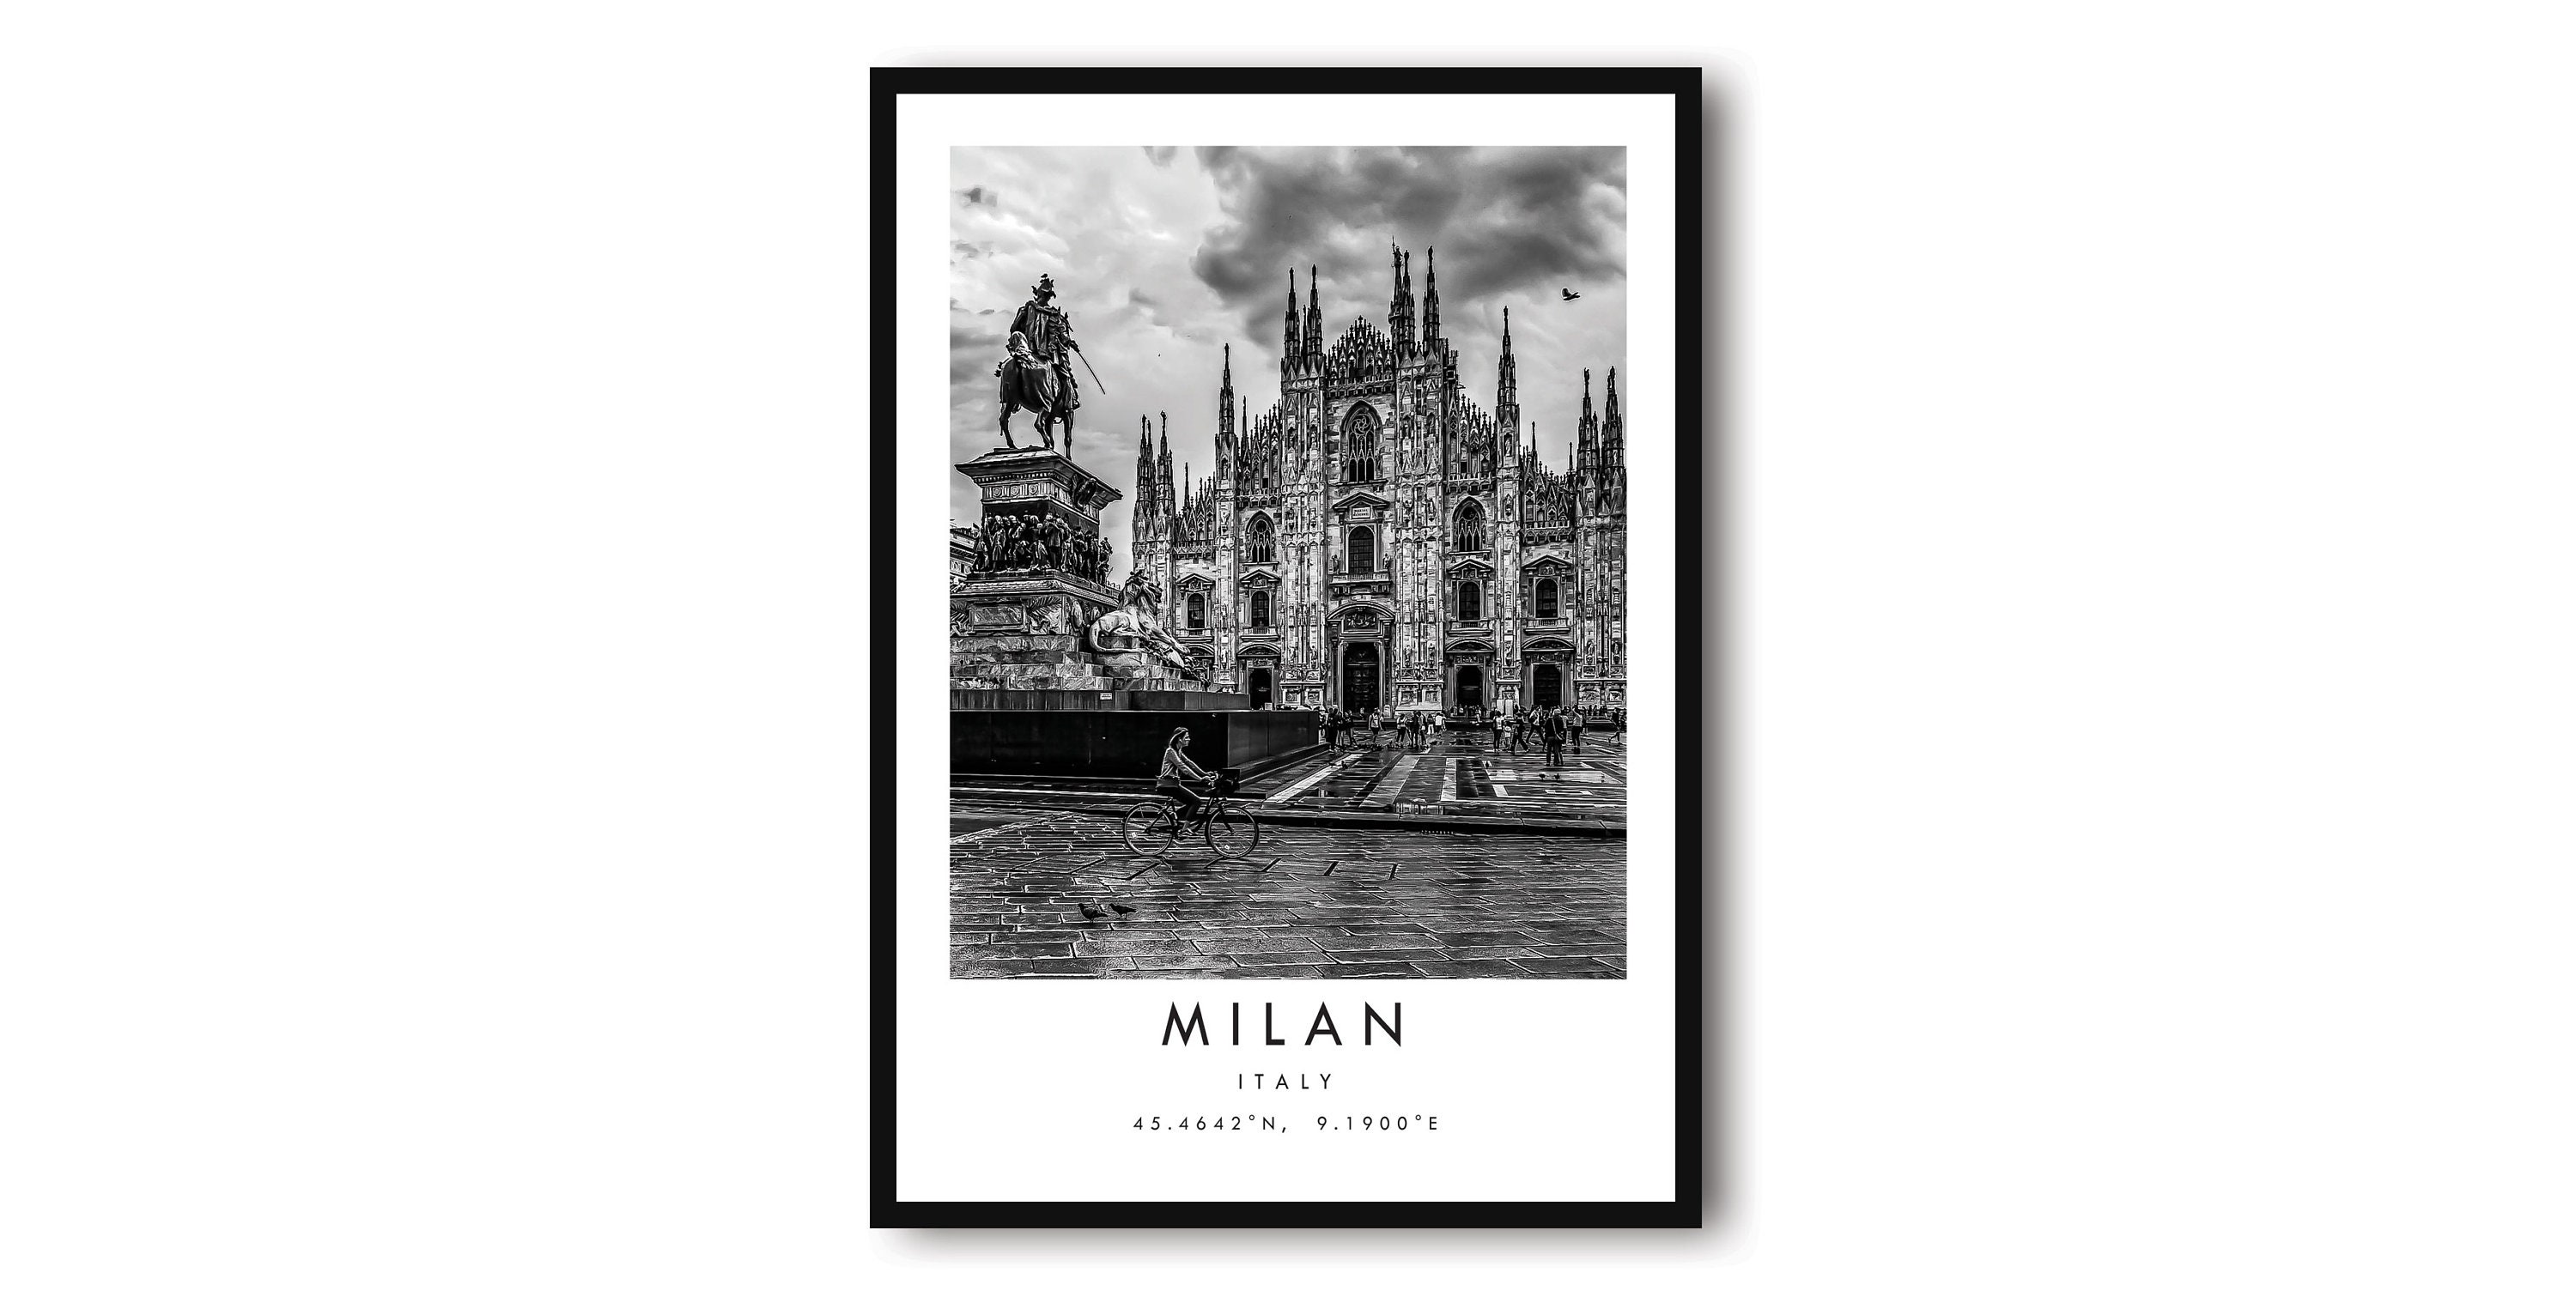 Milan Travel Print Milan Poster Print Italy Wall image